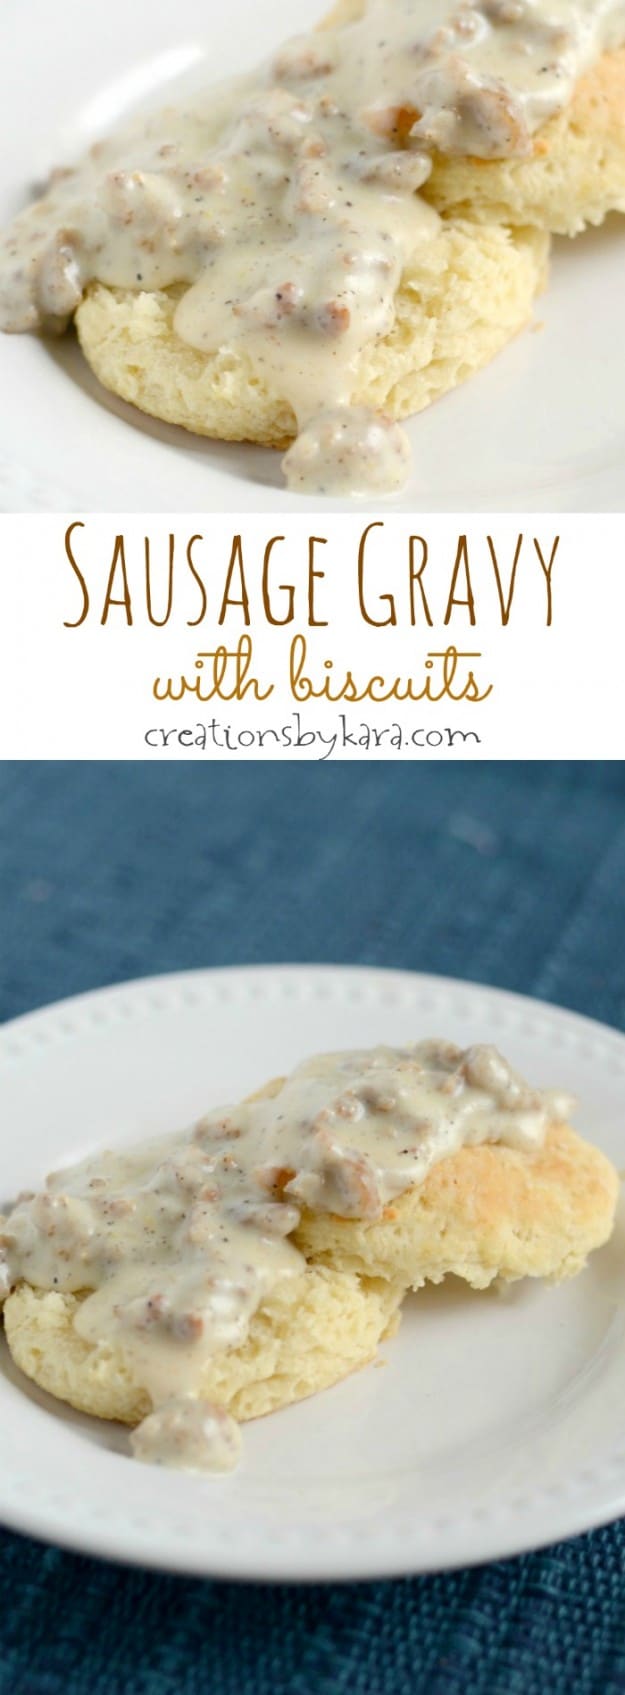 sausage gravy recipe collage